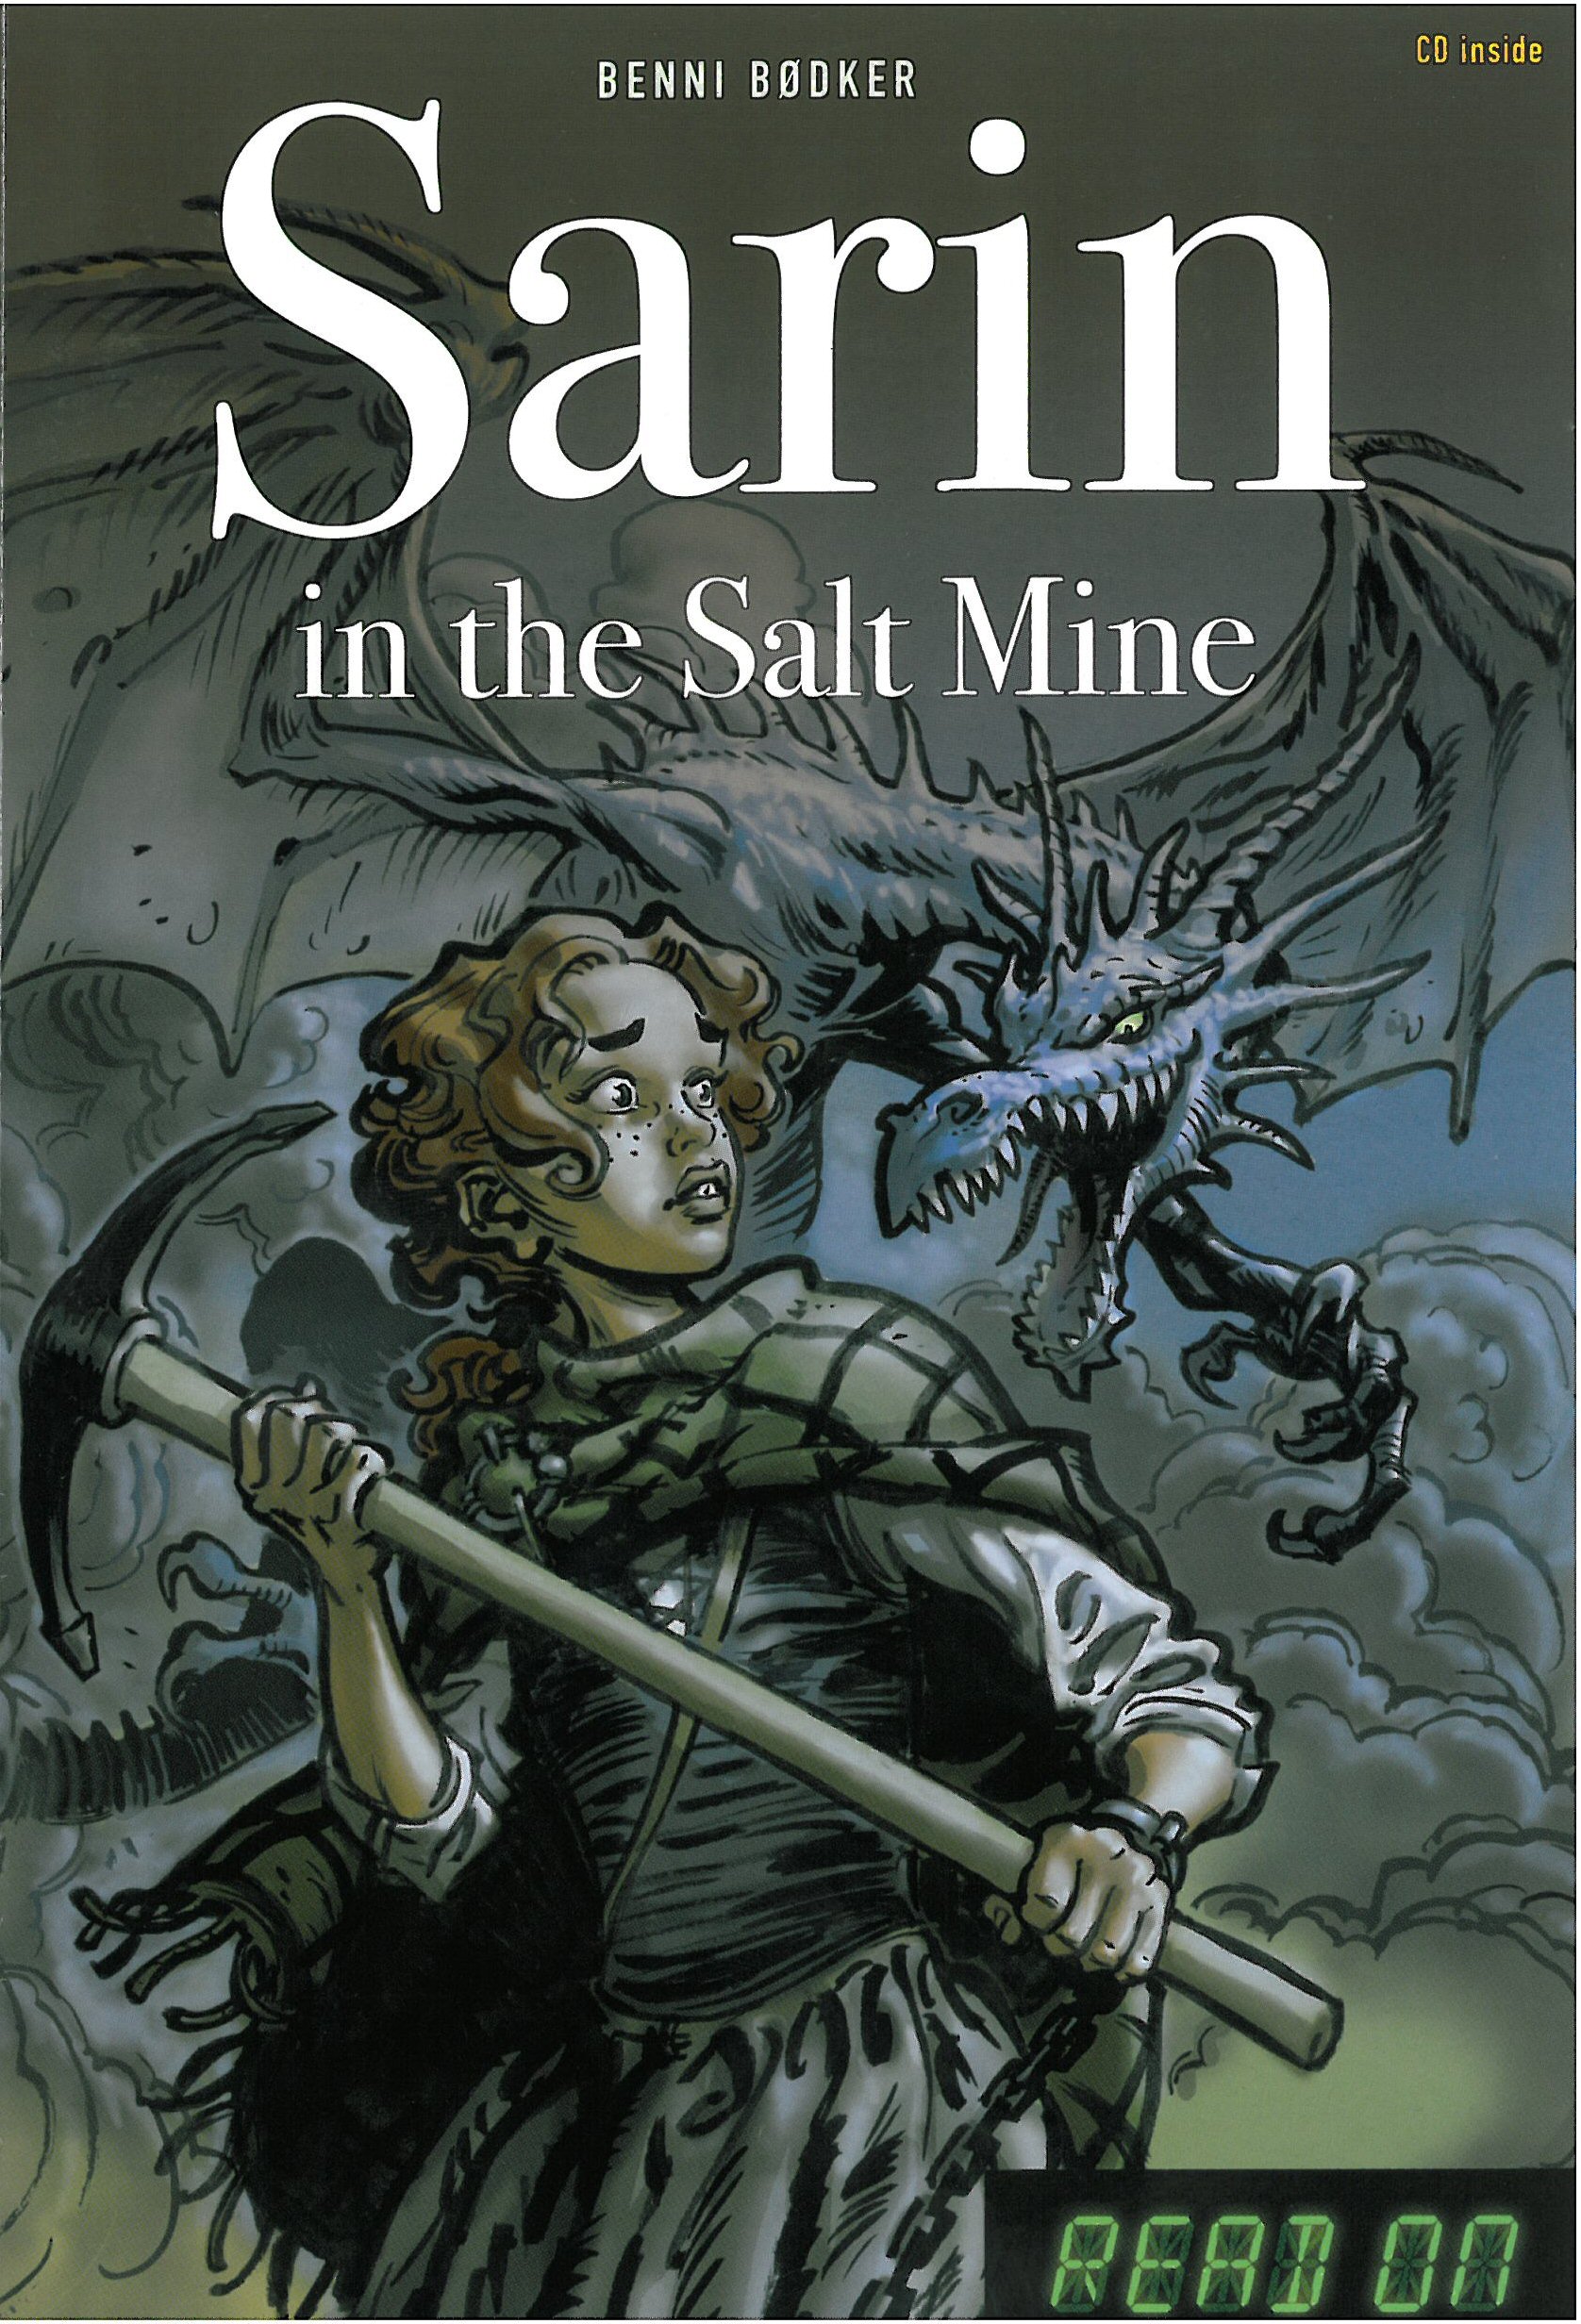 Sarin in the Salt Mine - READ ON series